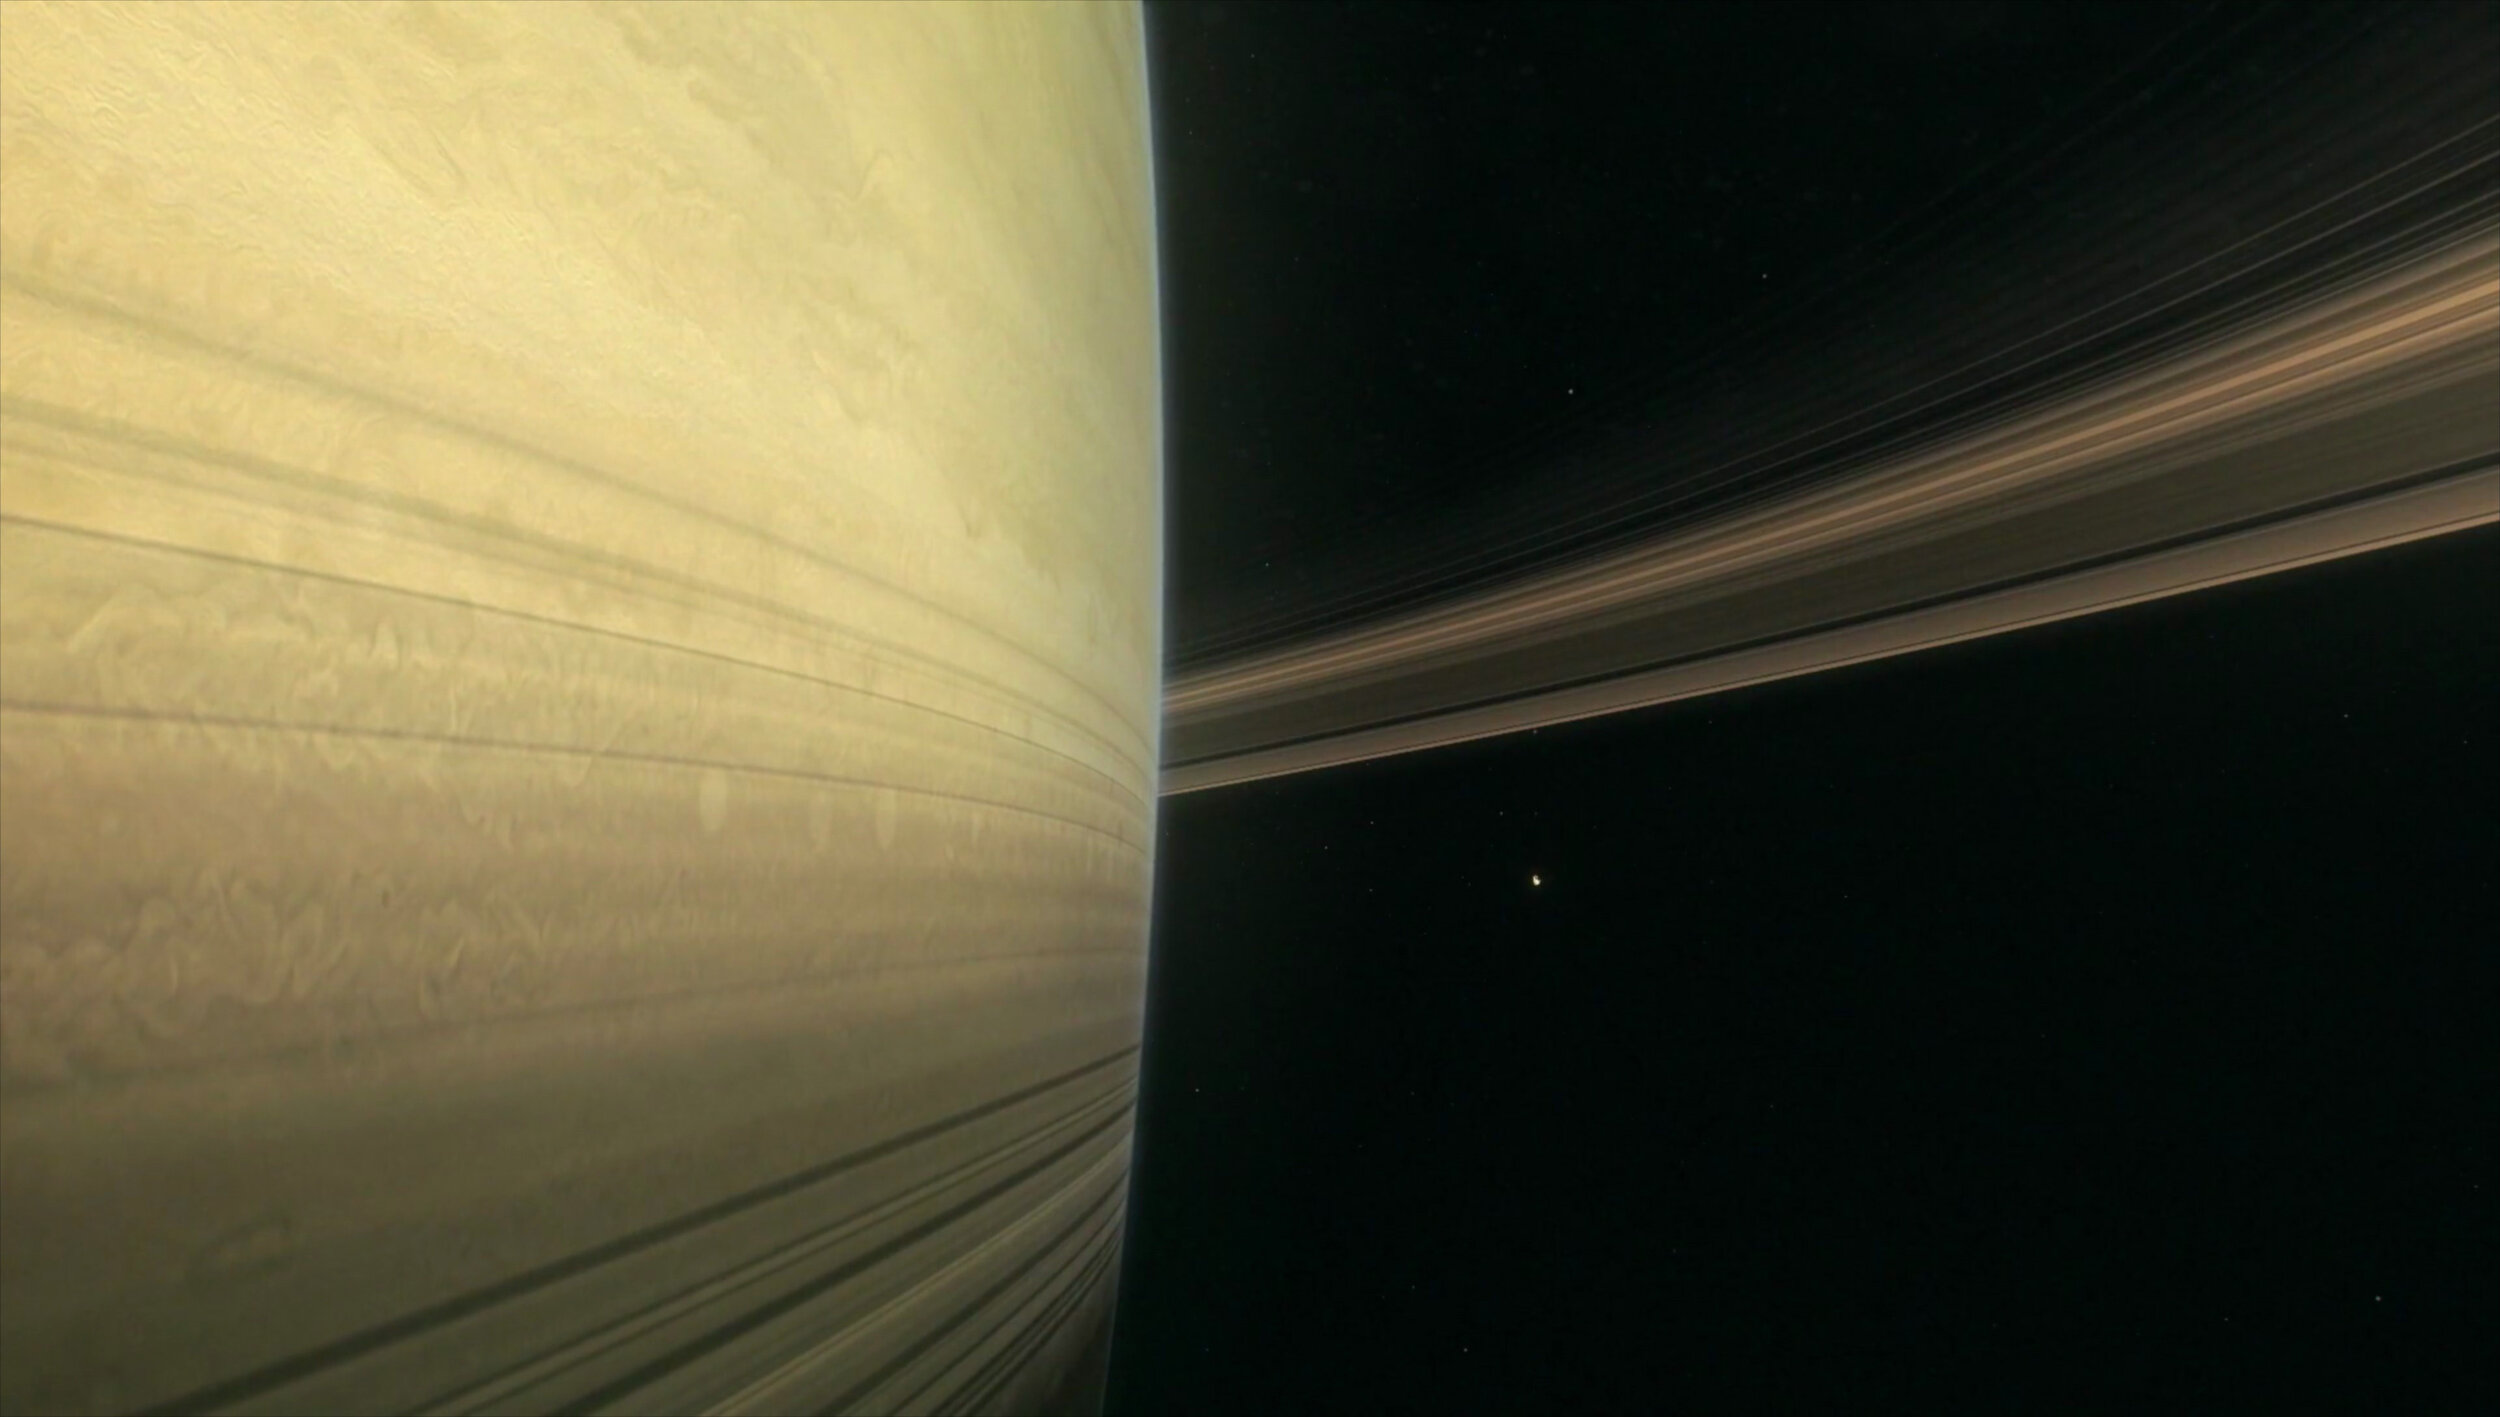 427_ Saturn up close © NASA _ Public Domain - 2018.jpg